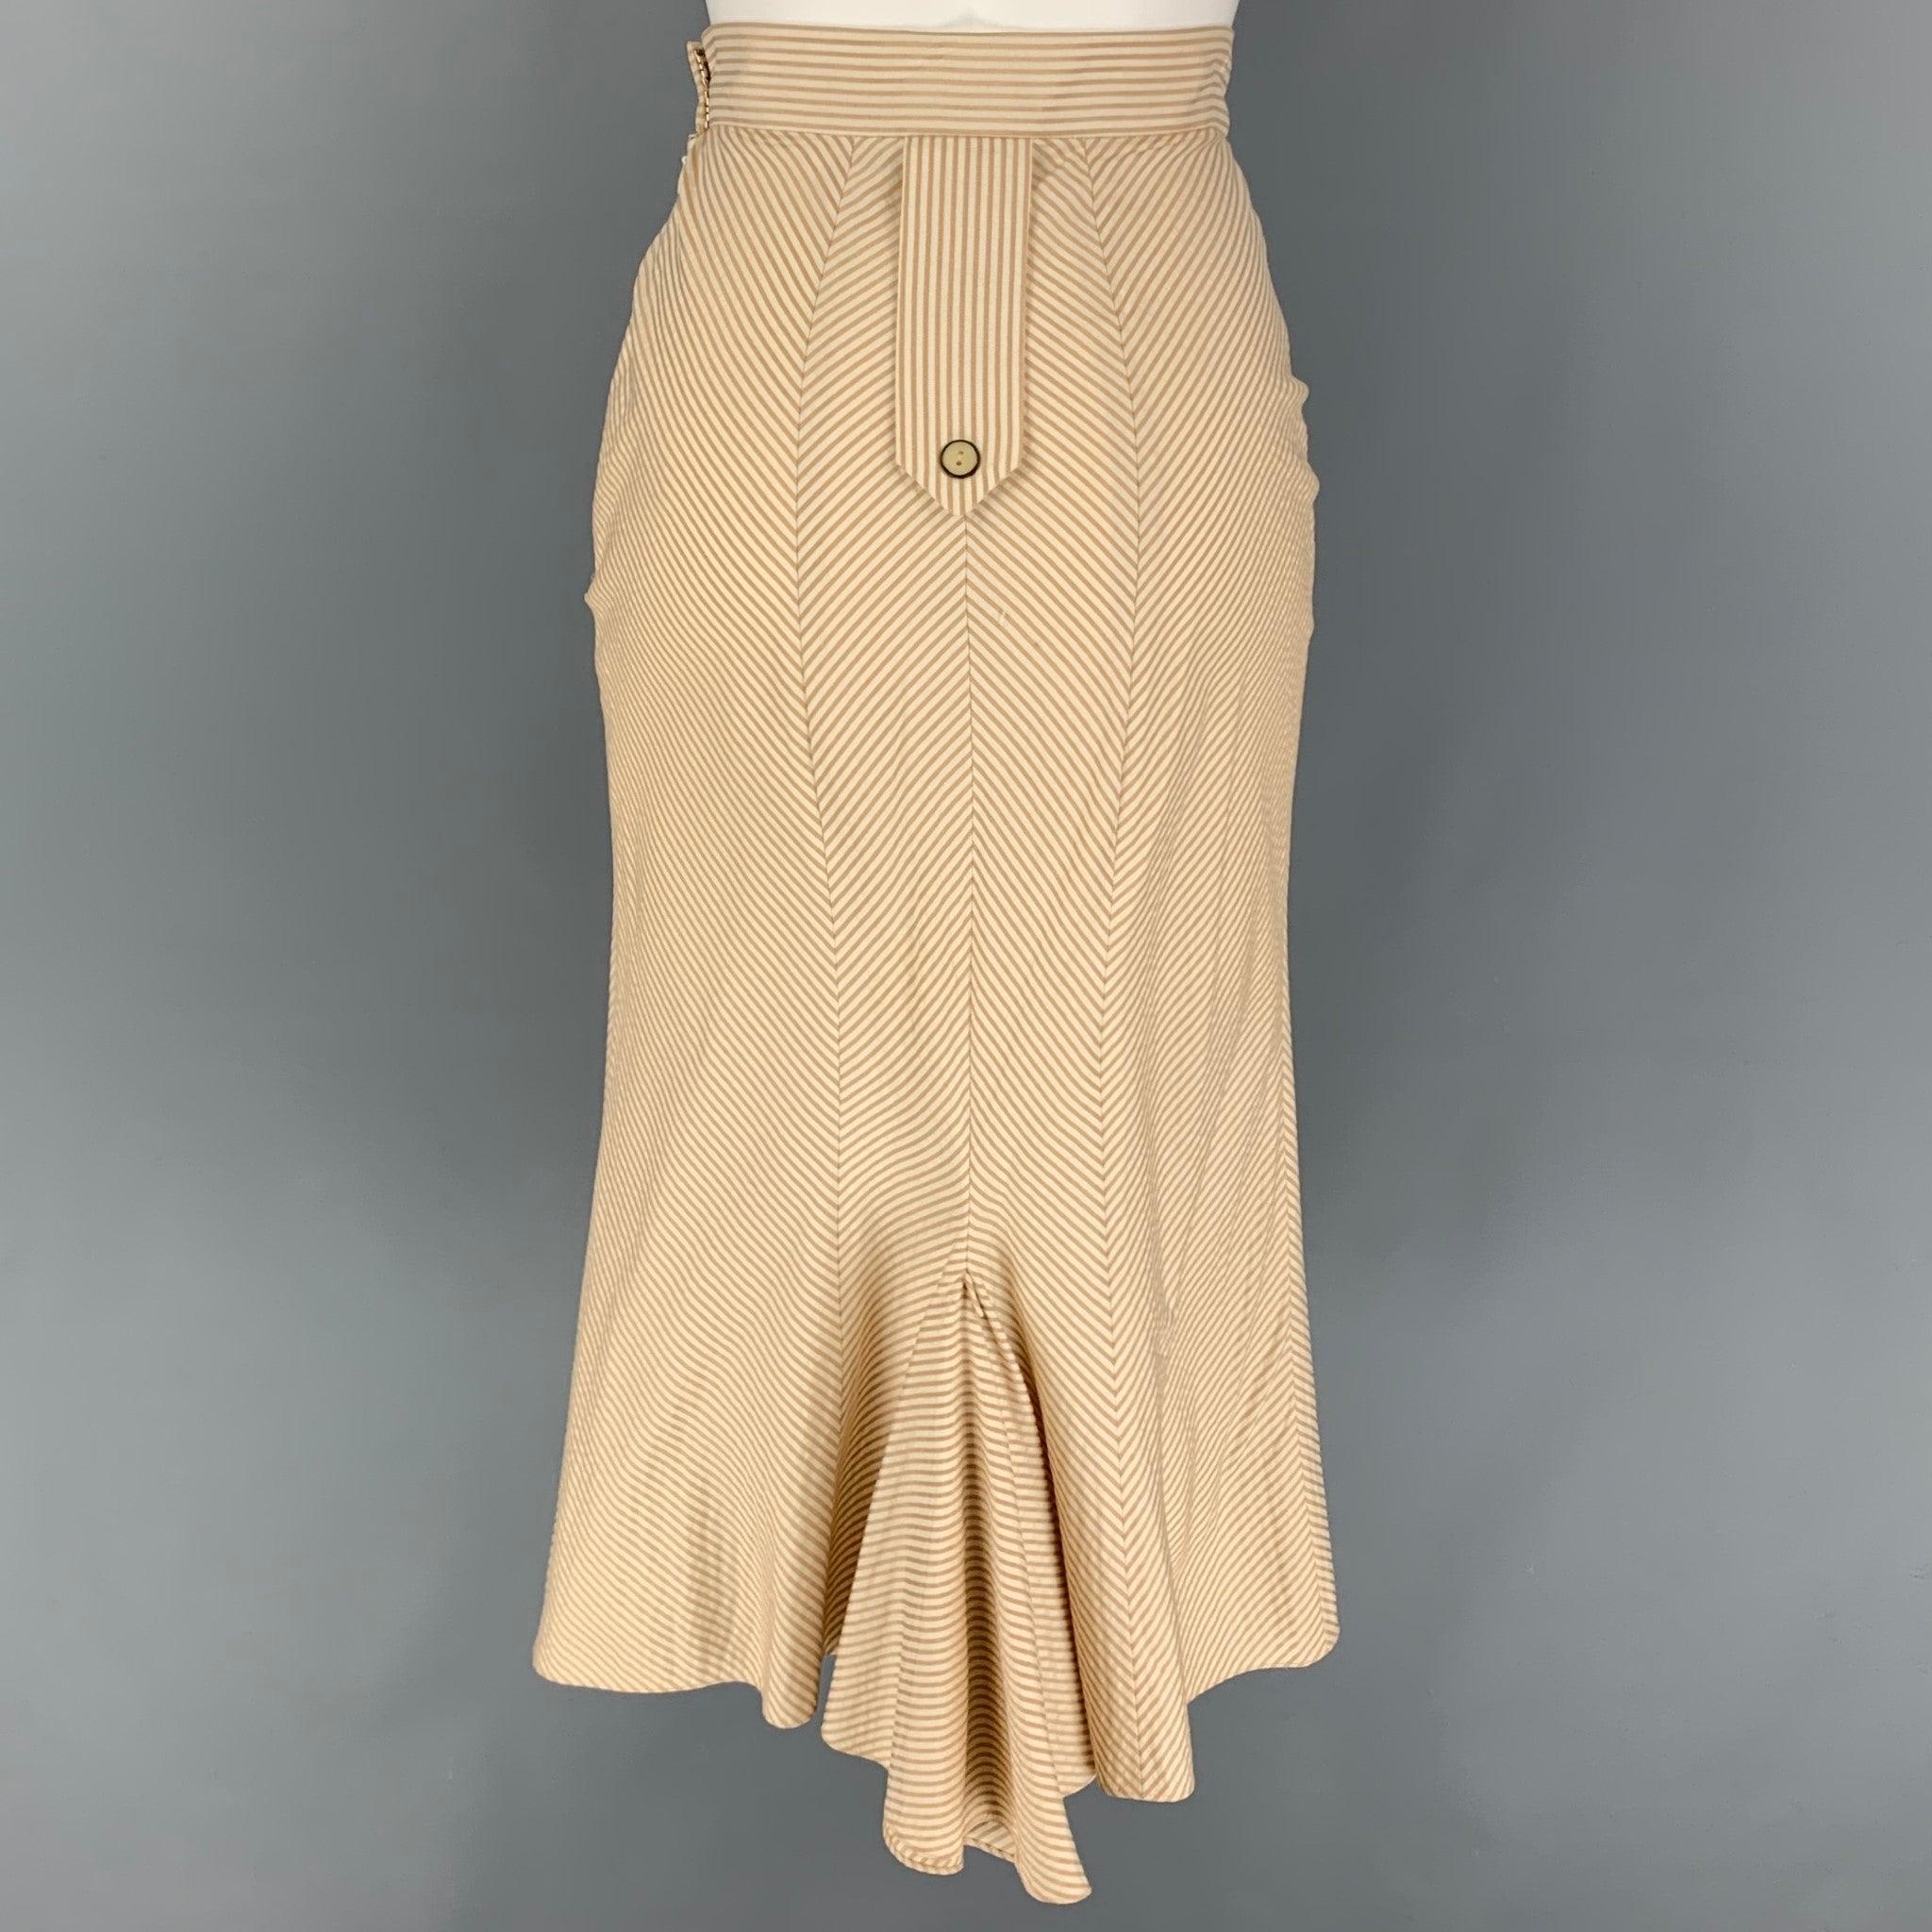 ZAC POSEN Size 6 Beige Cream Silk Stripe Mid-Calf Skirt In Good Condition For Sale In San Francisco, CA